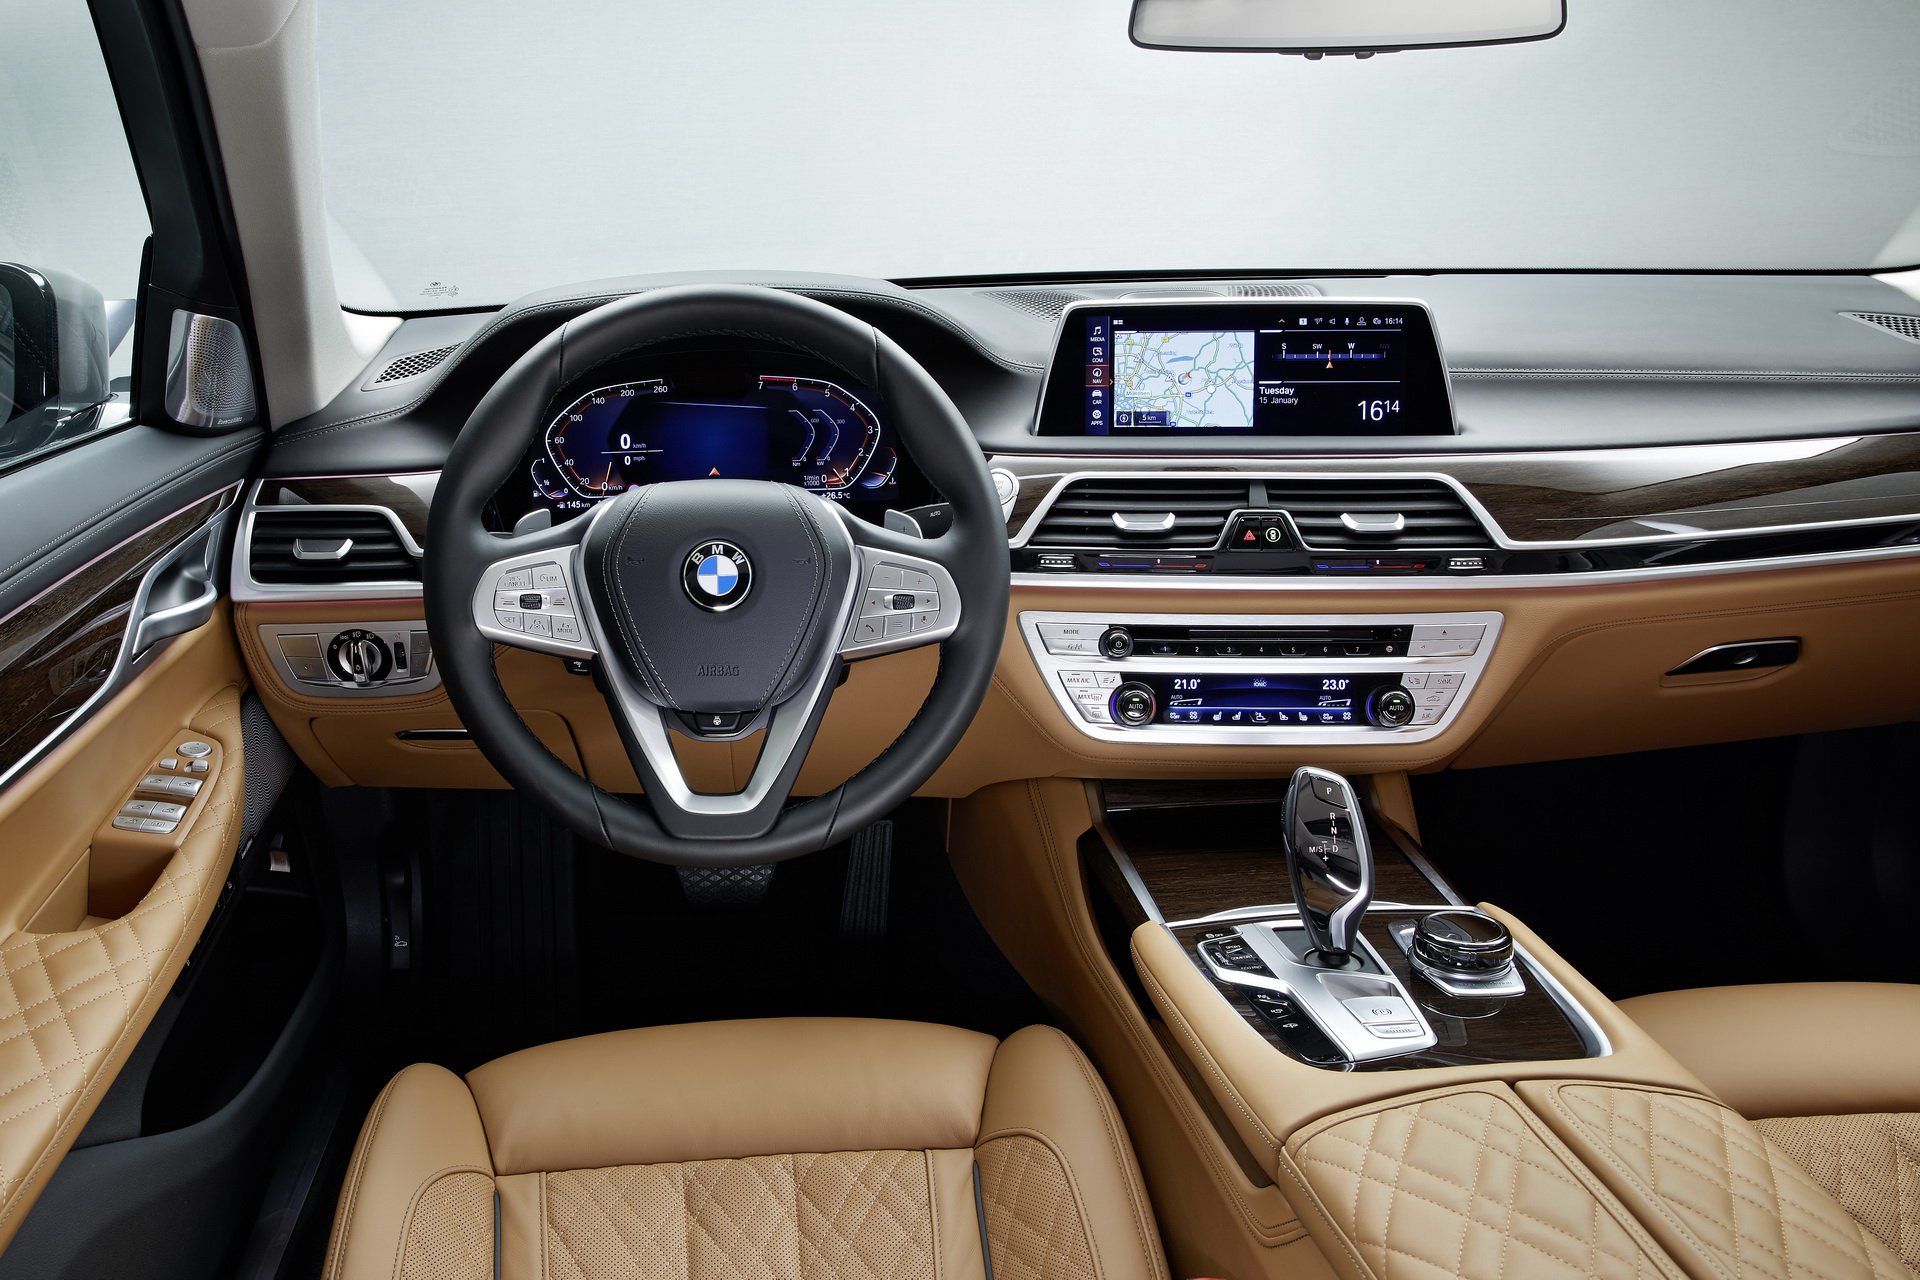 2020 BMW 7-Serisi Sedan resim galerisi (16.01.2019)